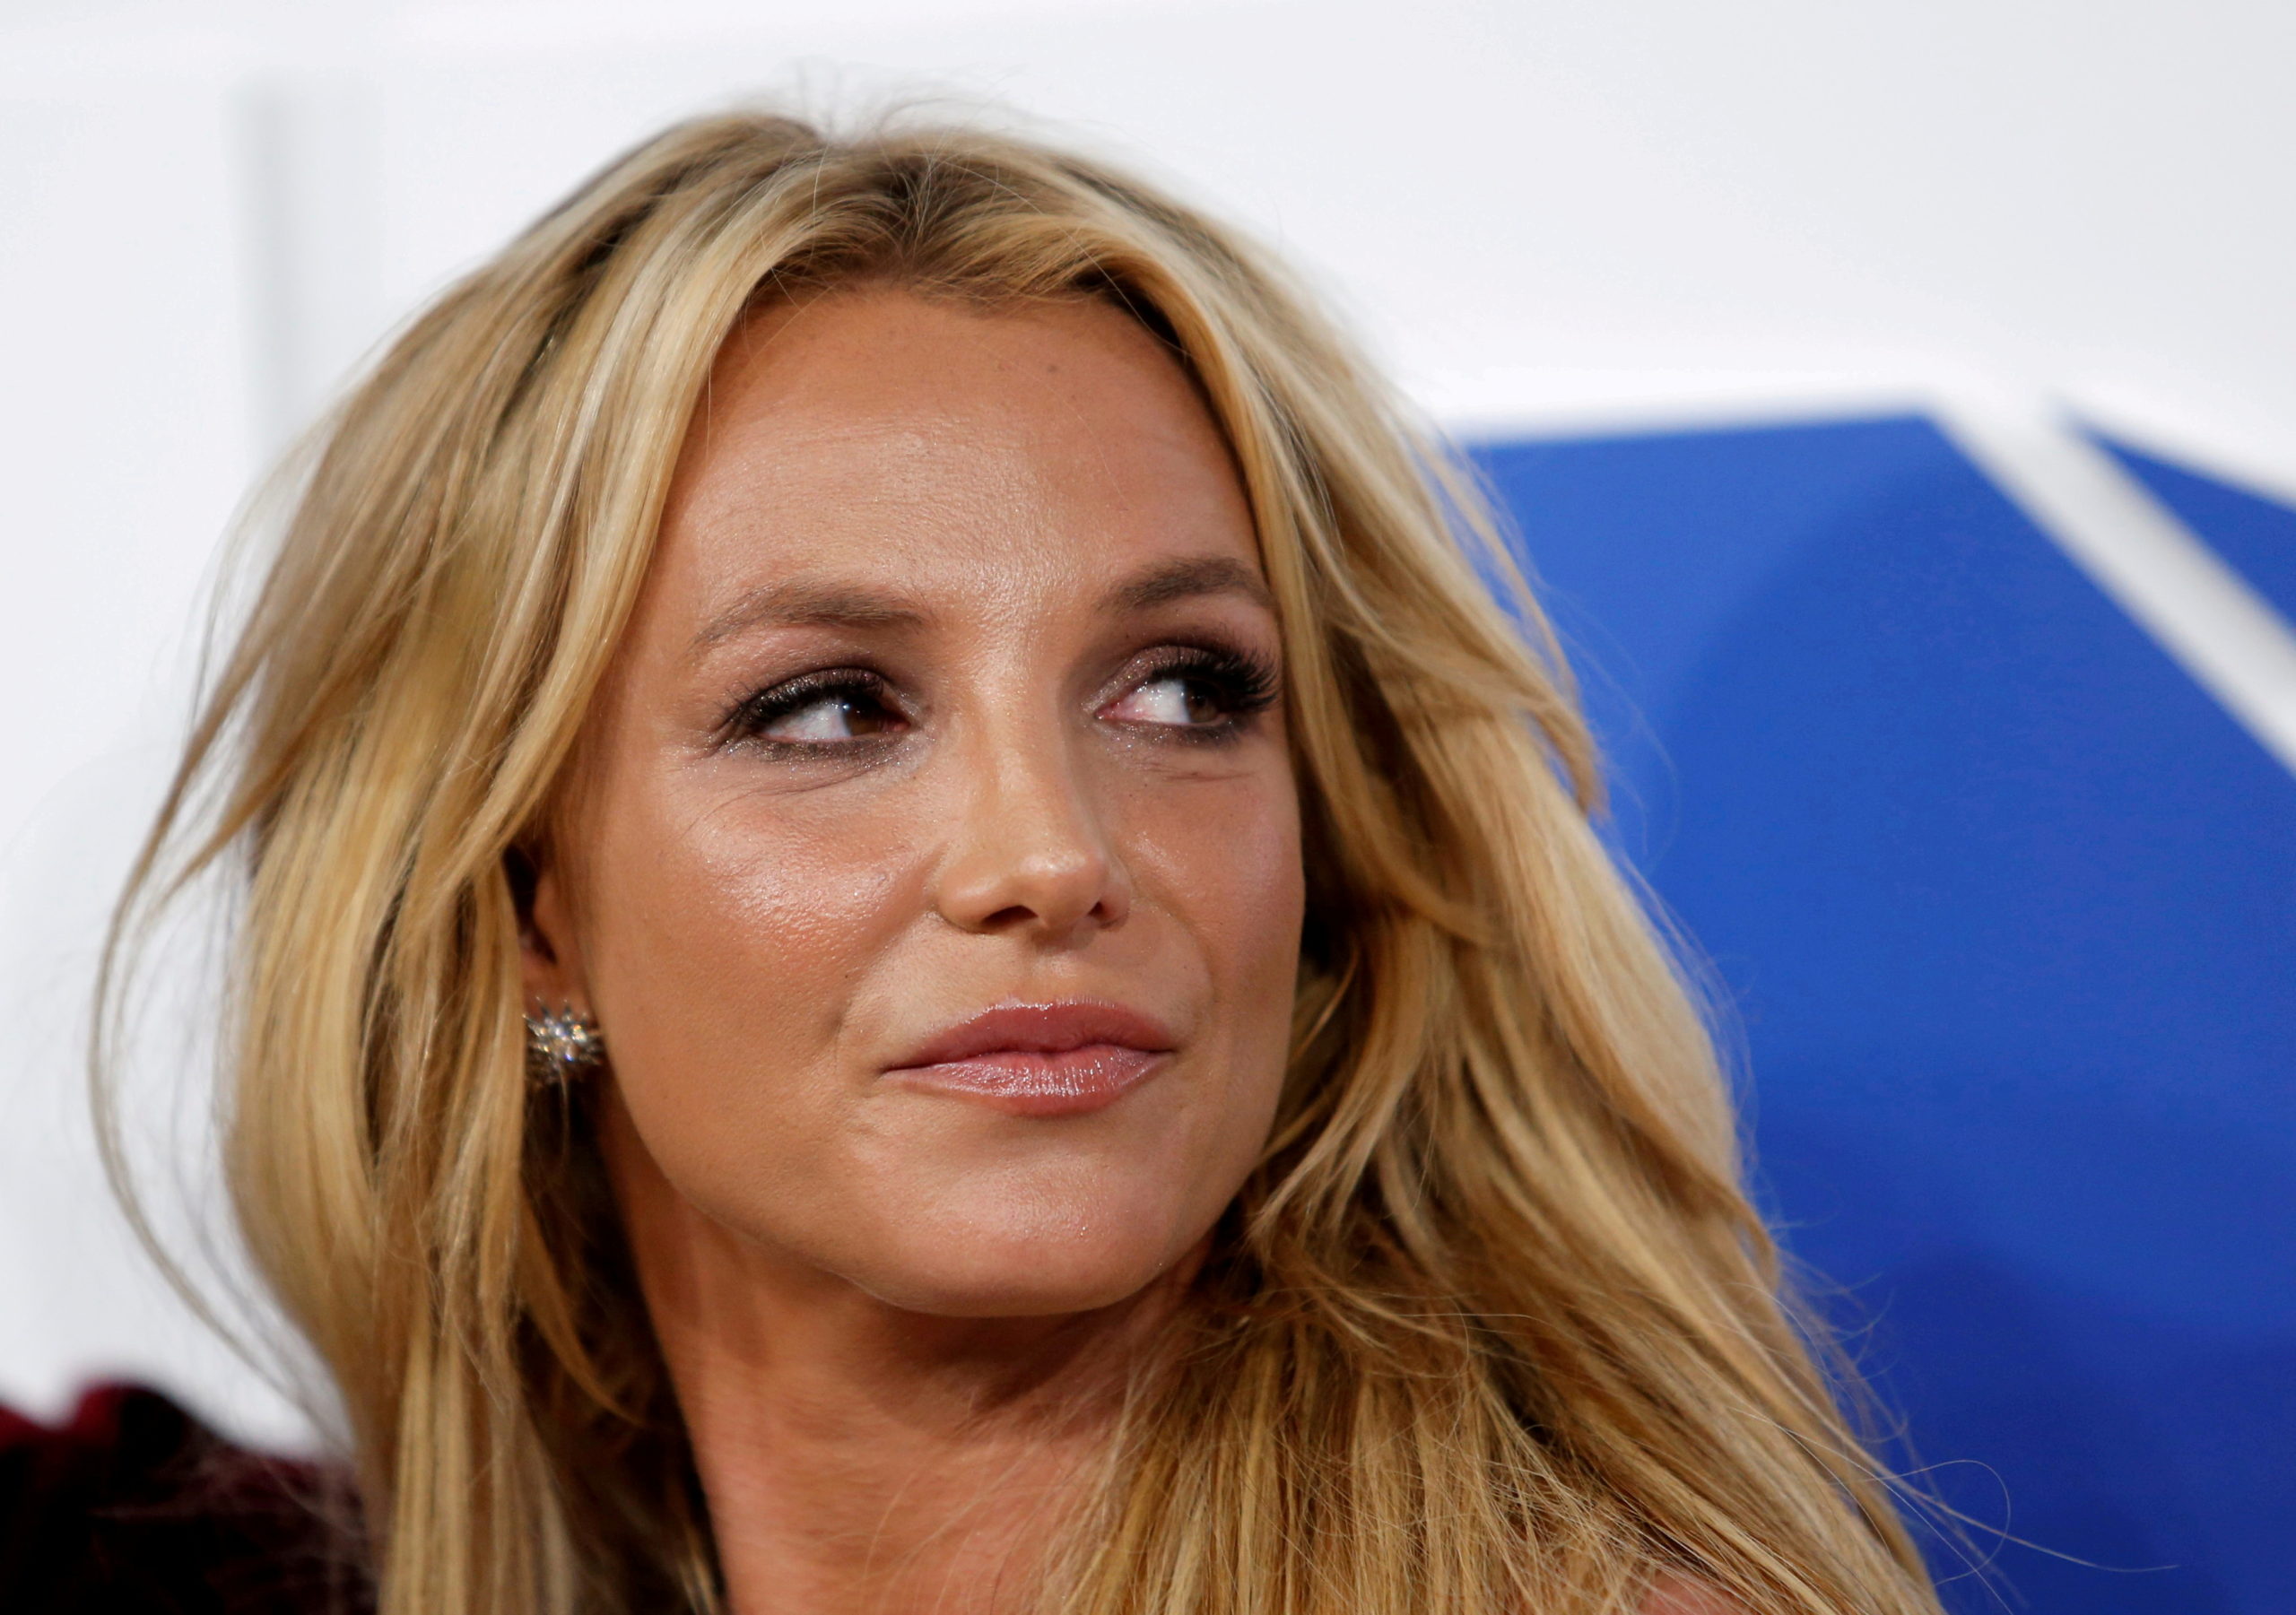 Singer Britney Spears arrives at the 2016 MTV Video Music Awards in New York, U.S., August 28, 2016.  REUTERS/Eduardo Munoz